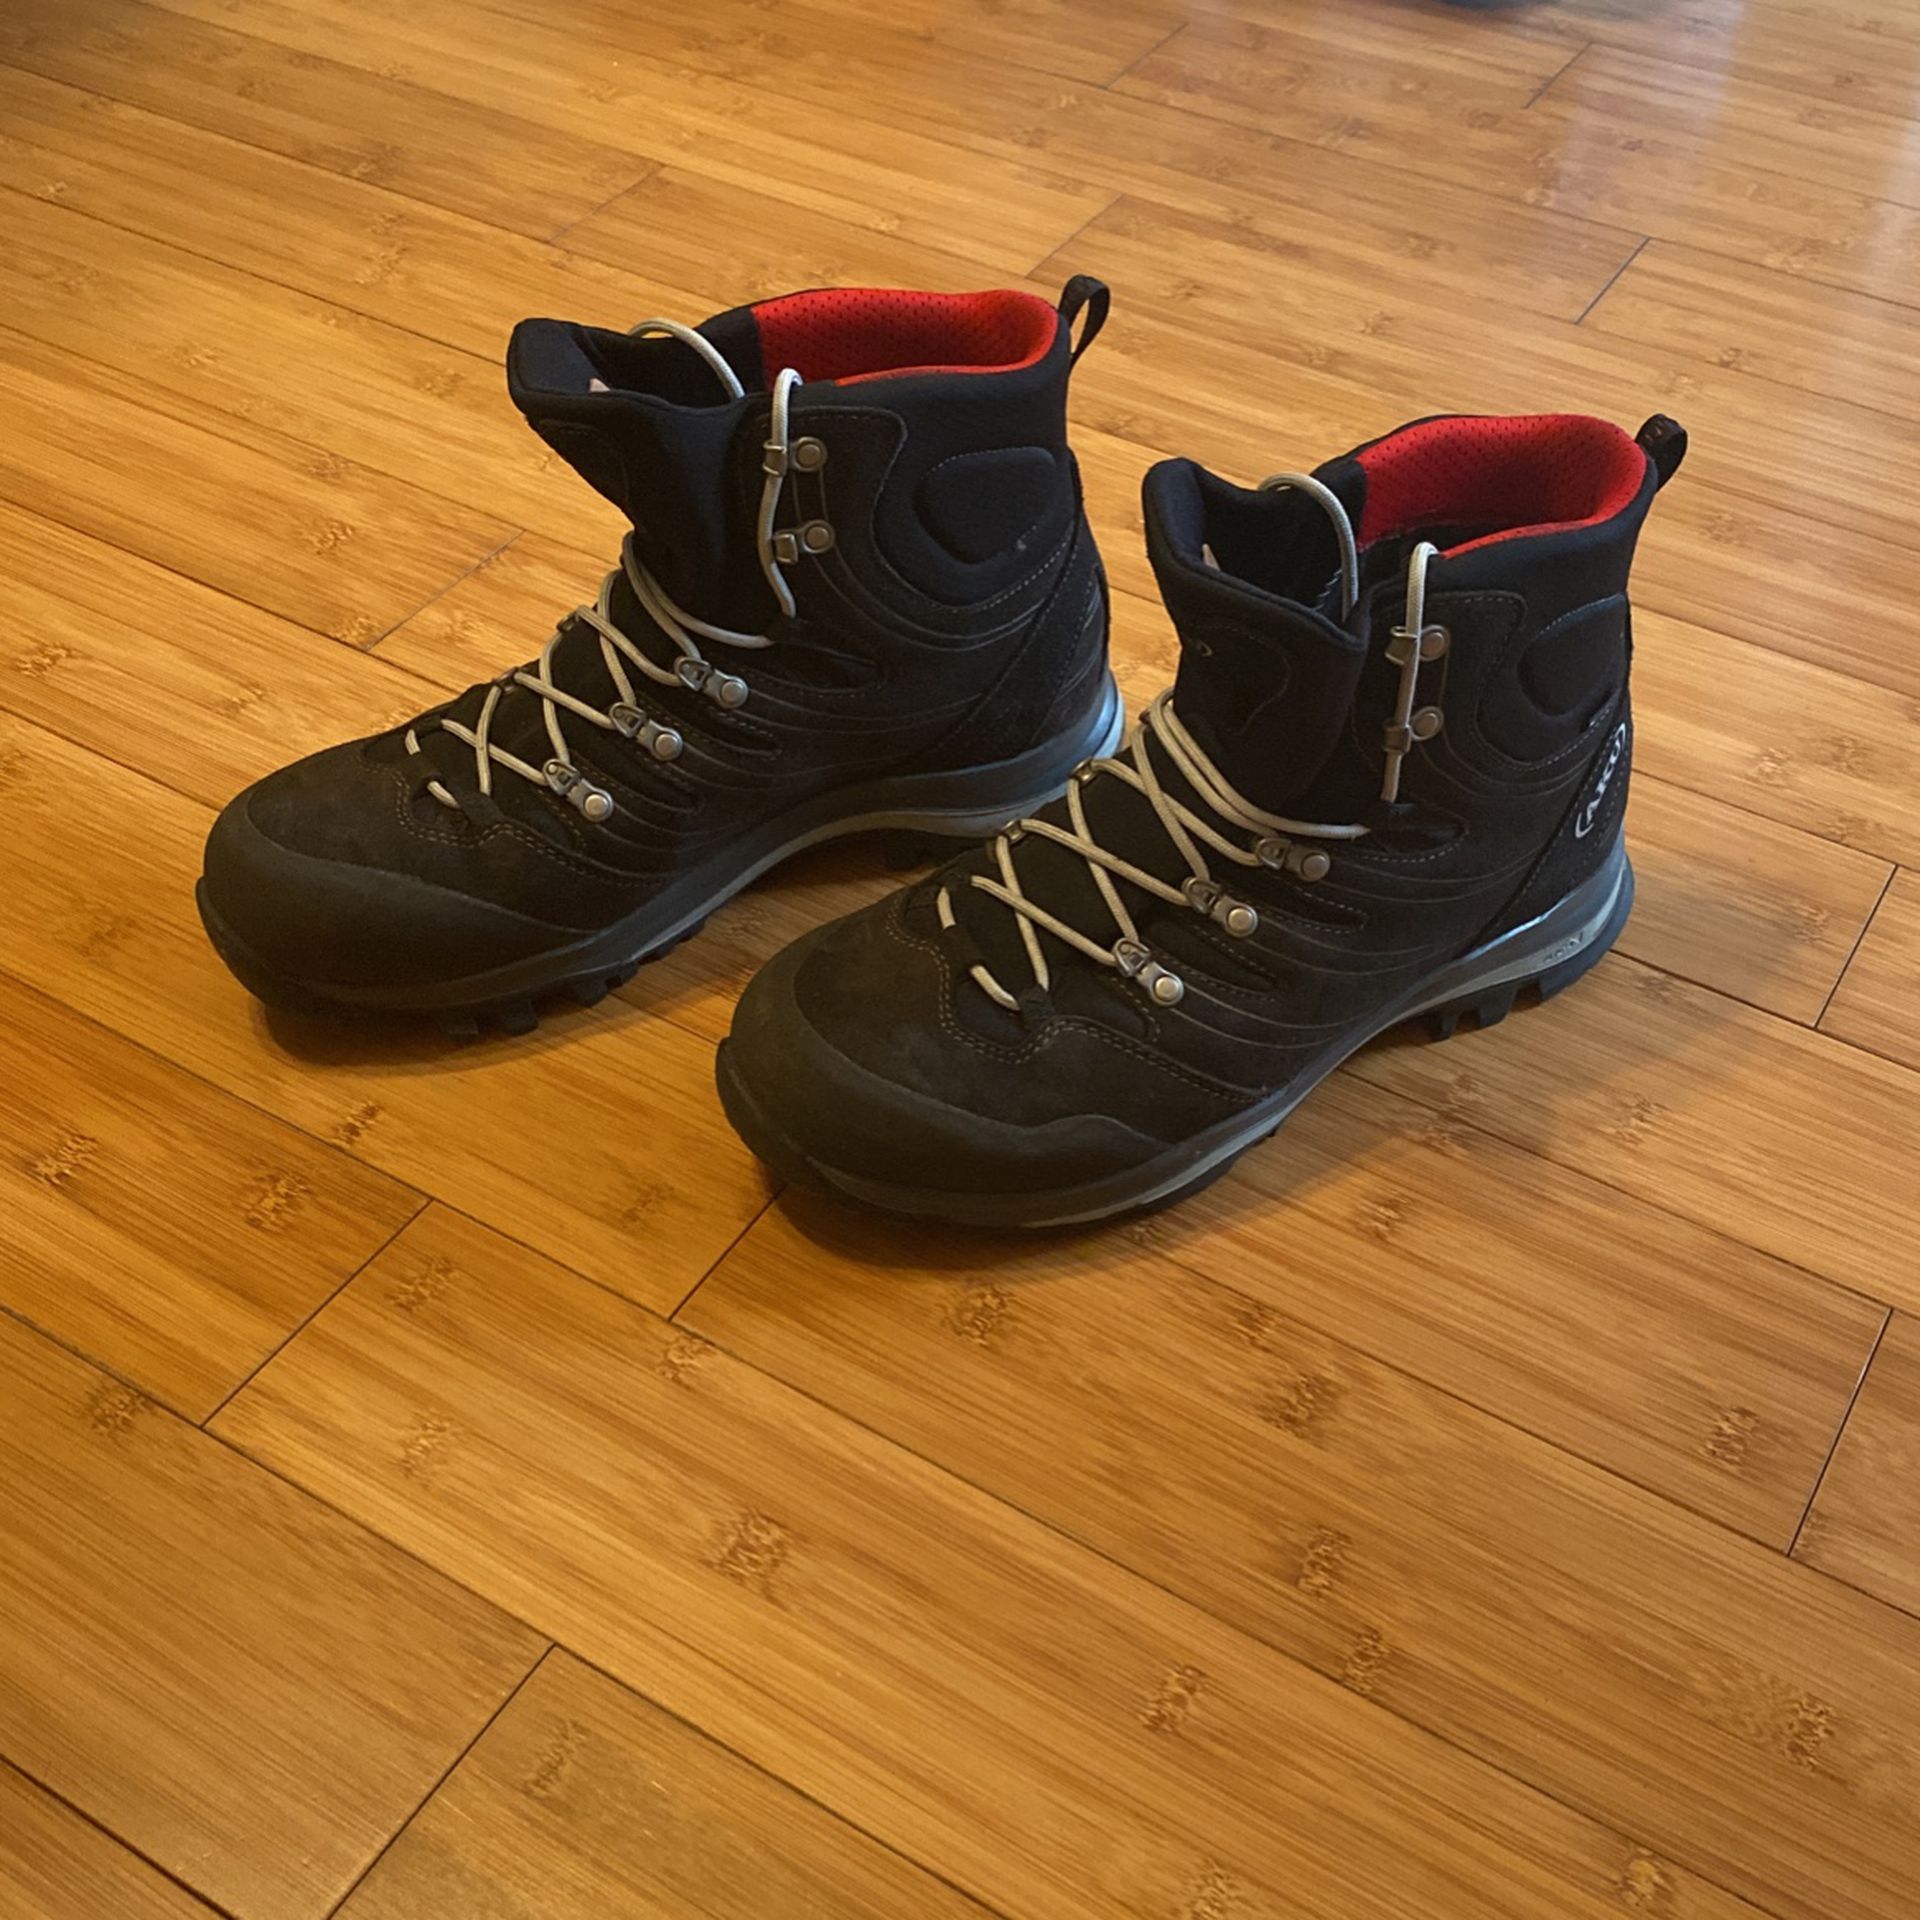 AKU Alterra GTX Hiking Boots